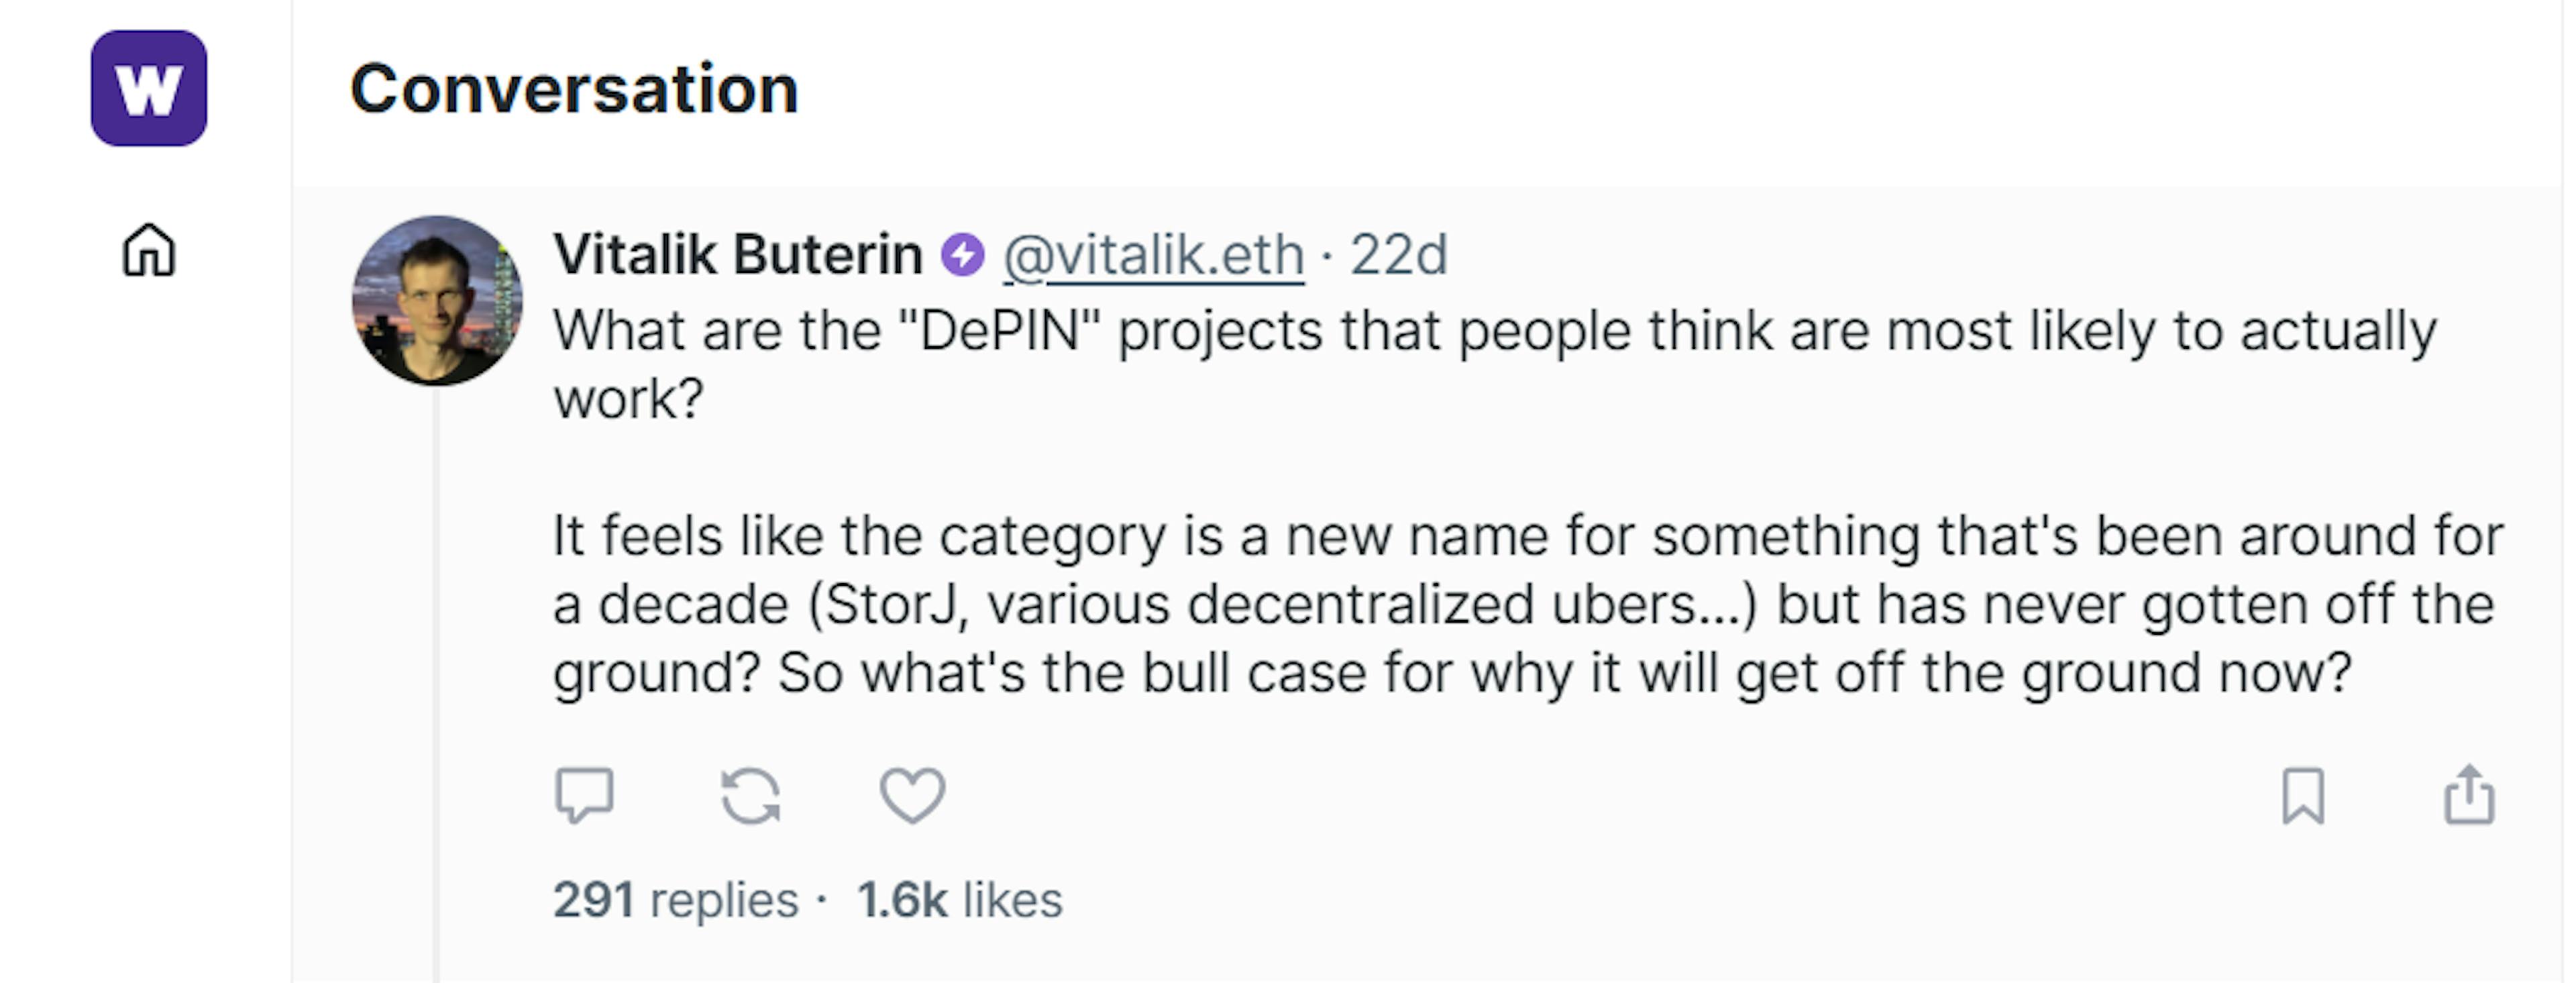 Vitalik Burterin sur les projets DePin